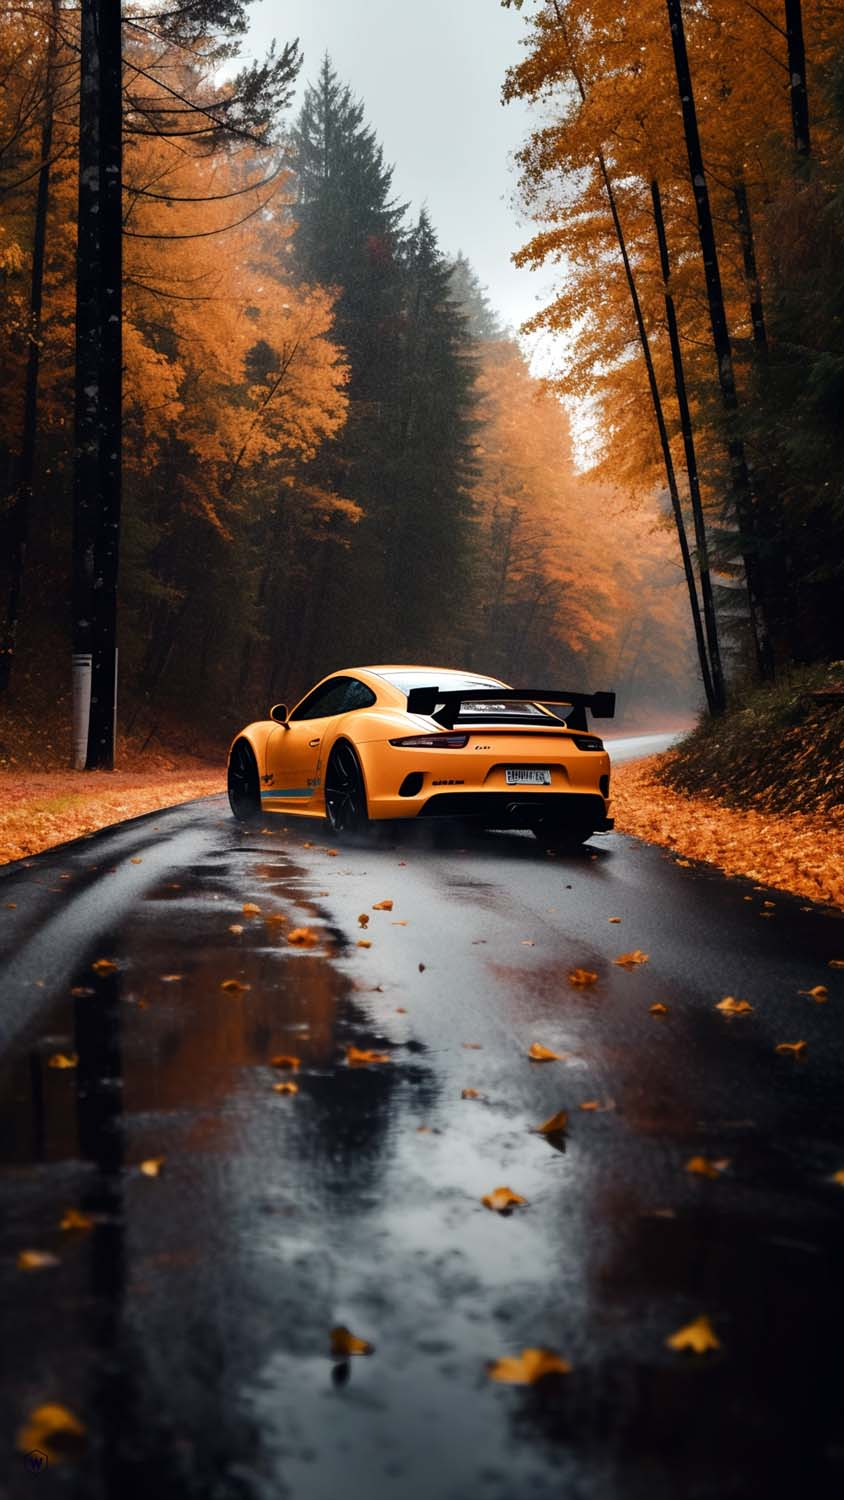 Porsche 911 Carrera black car 640x1136 iPhone 55S5CSE wallpaper  background picture image